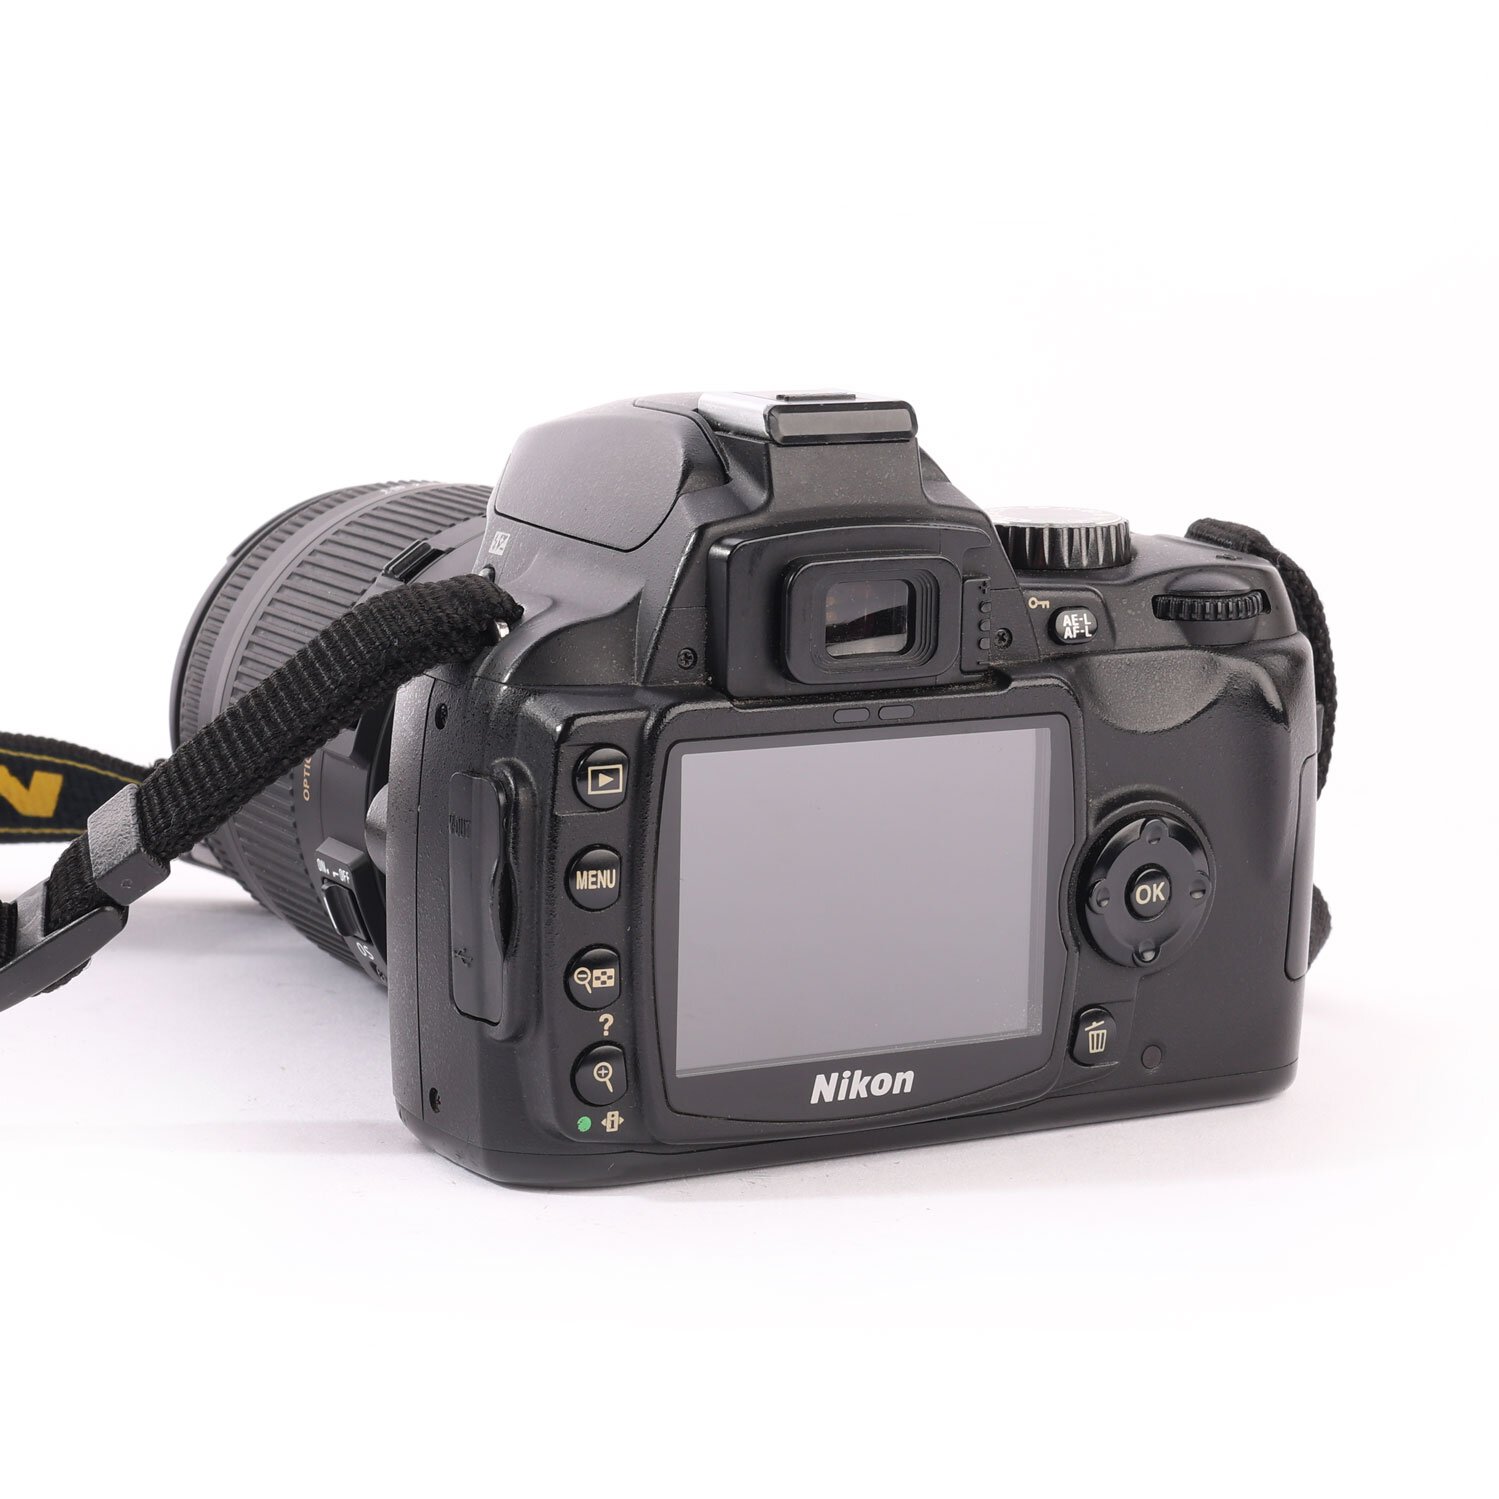 Nikon D60 - Sigma DC 18-250mm 1:3.5-6.3 MACRO HSM